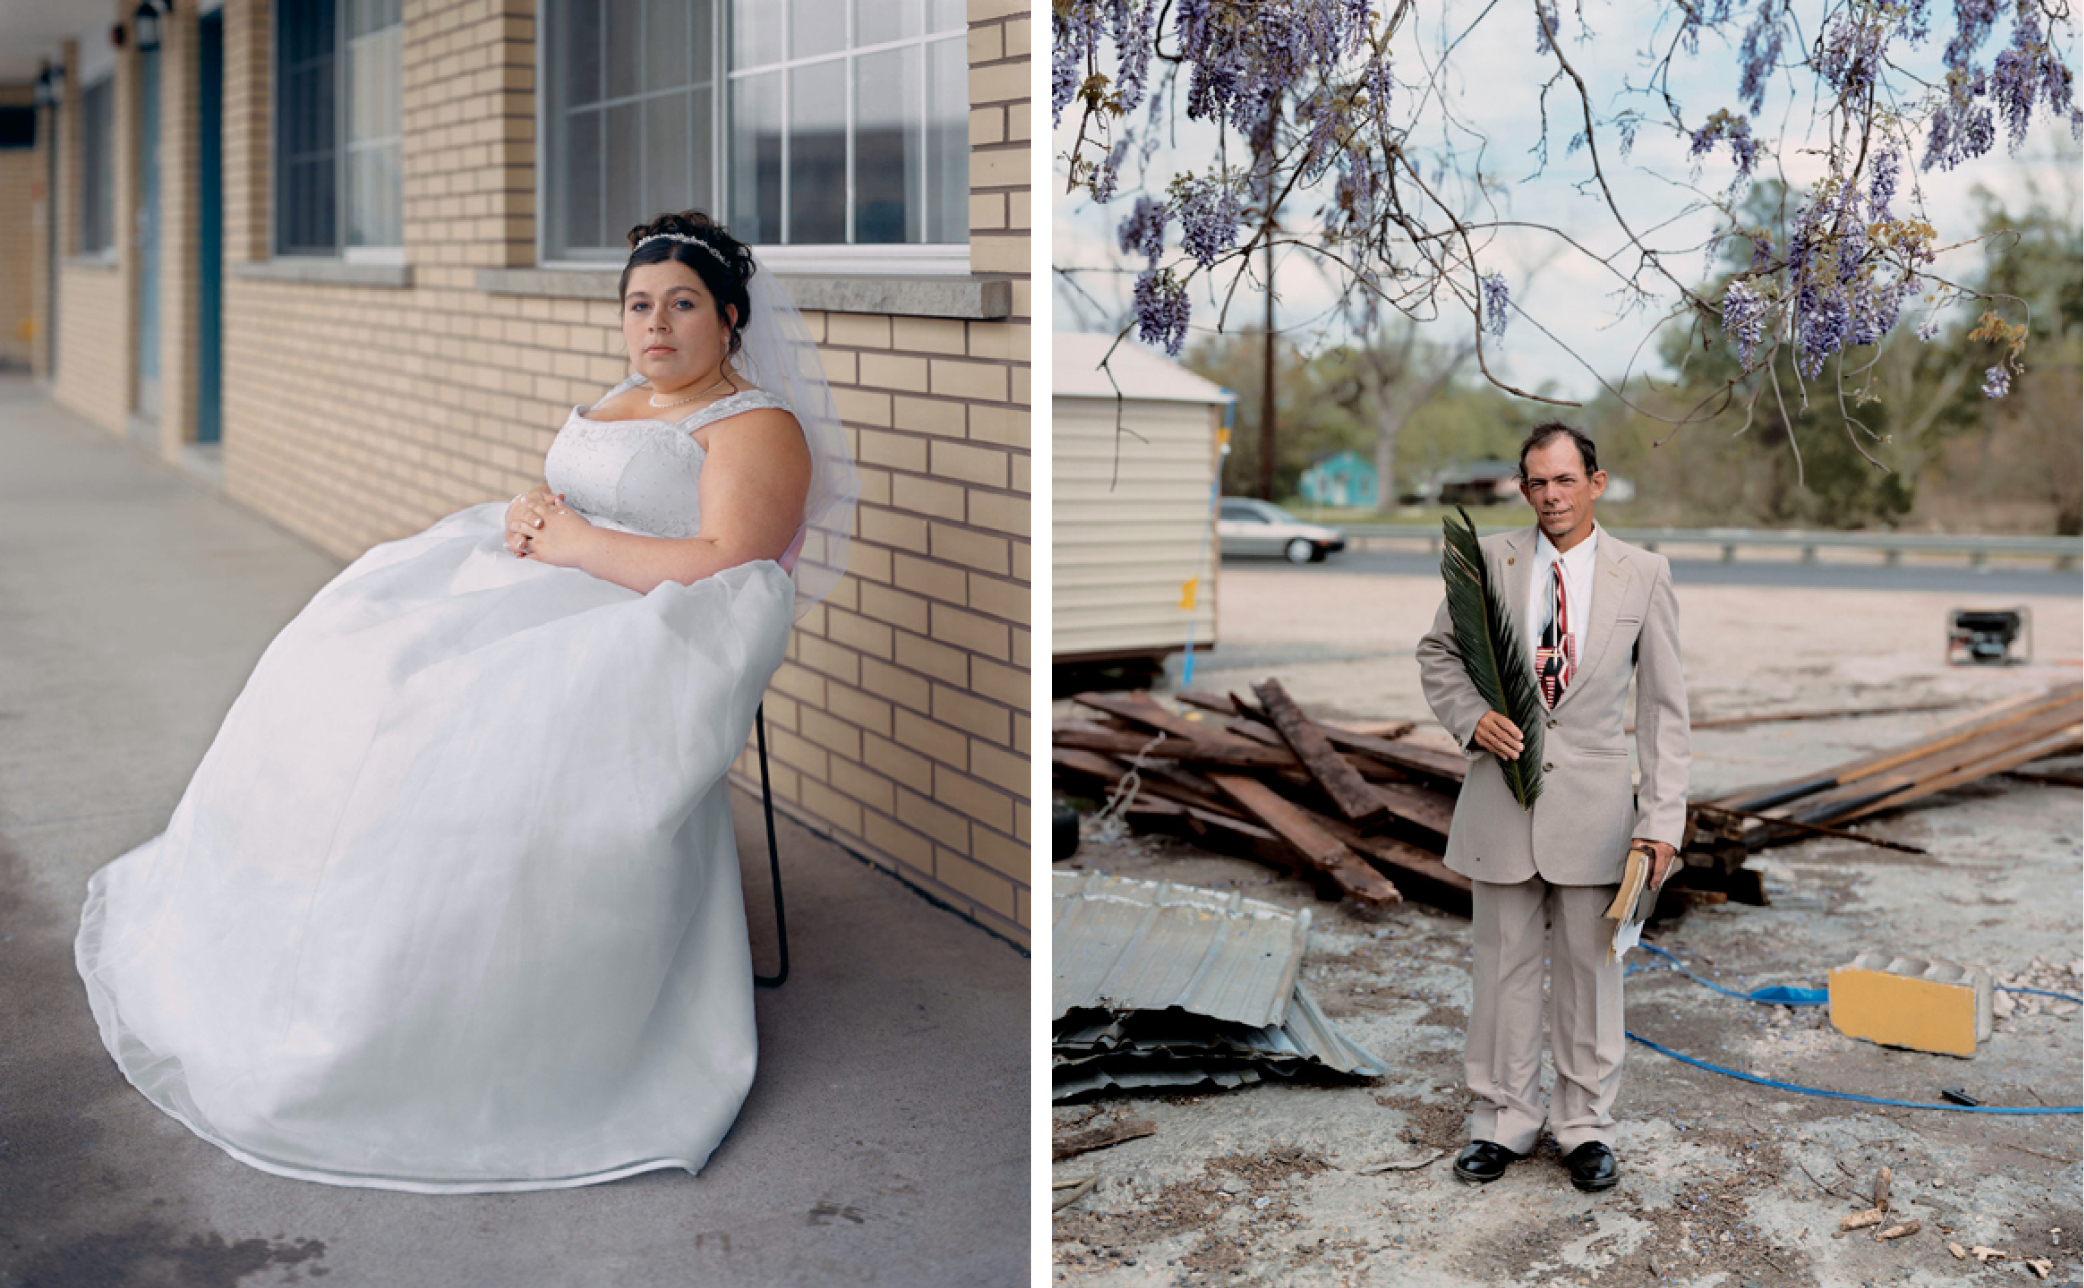 Left: Melissa, 2005, from Niagara © Alec Soth. Right